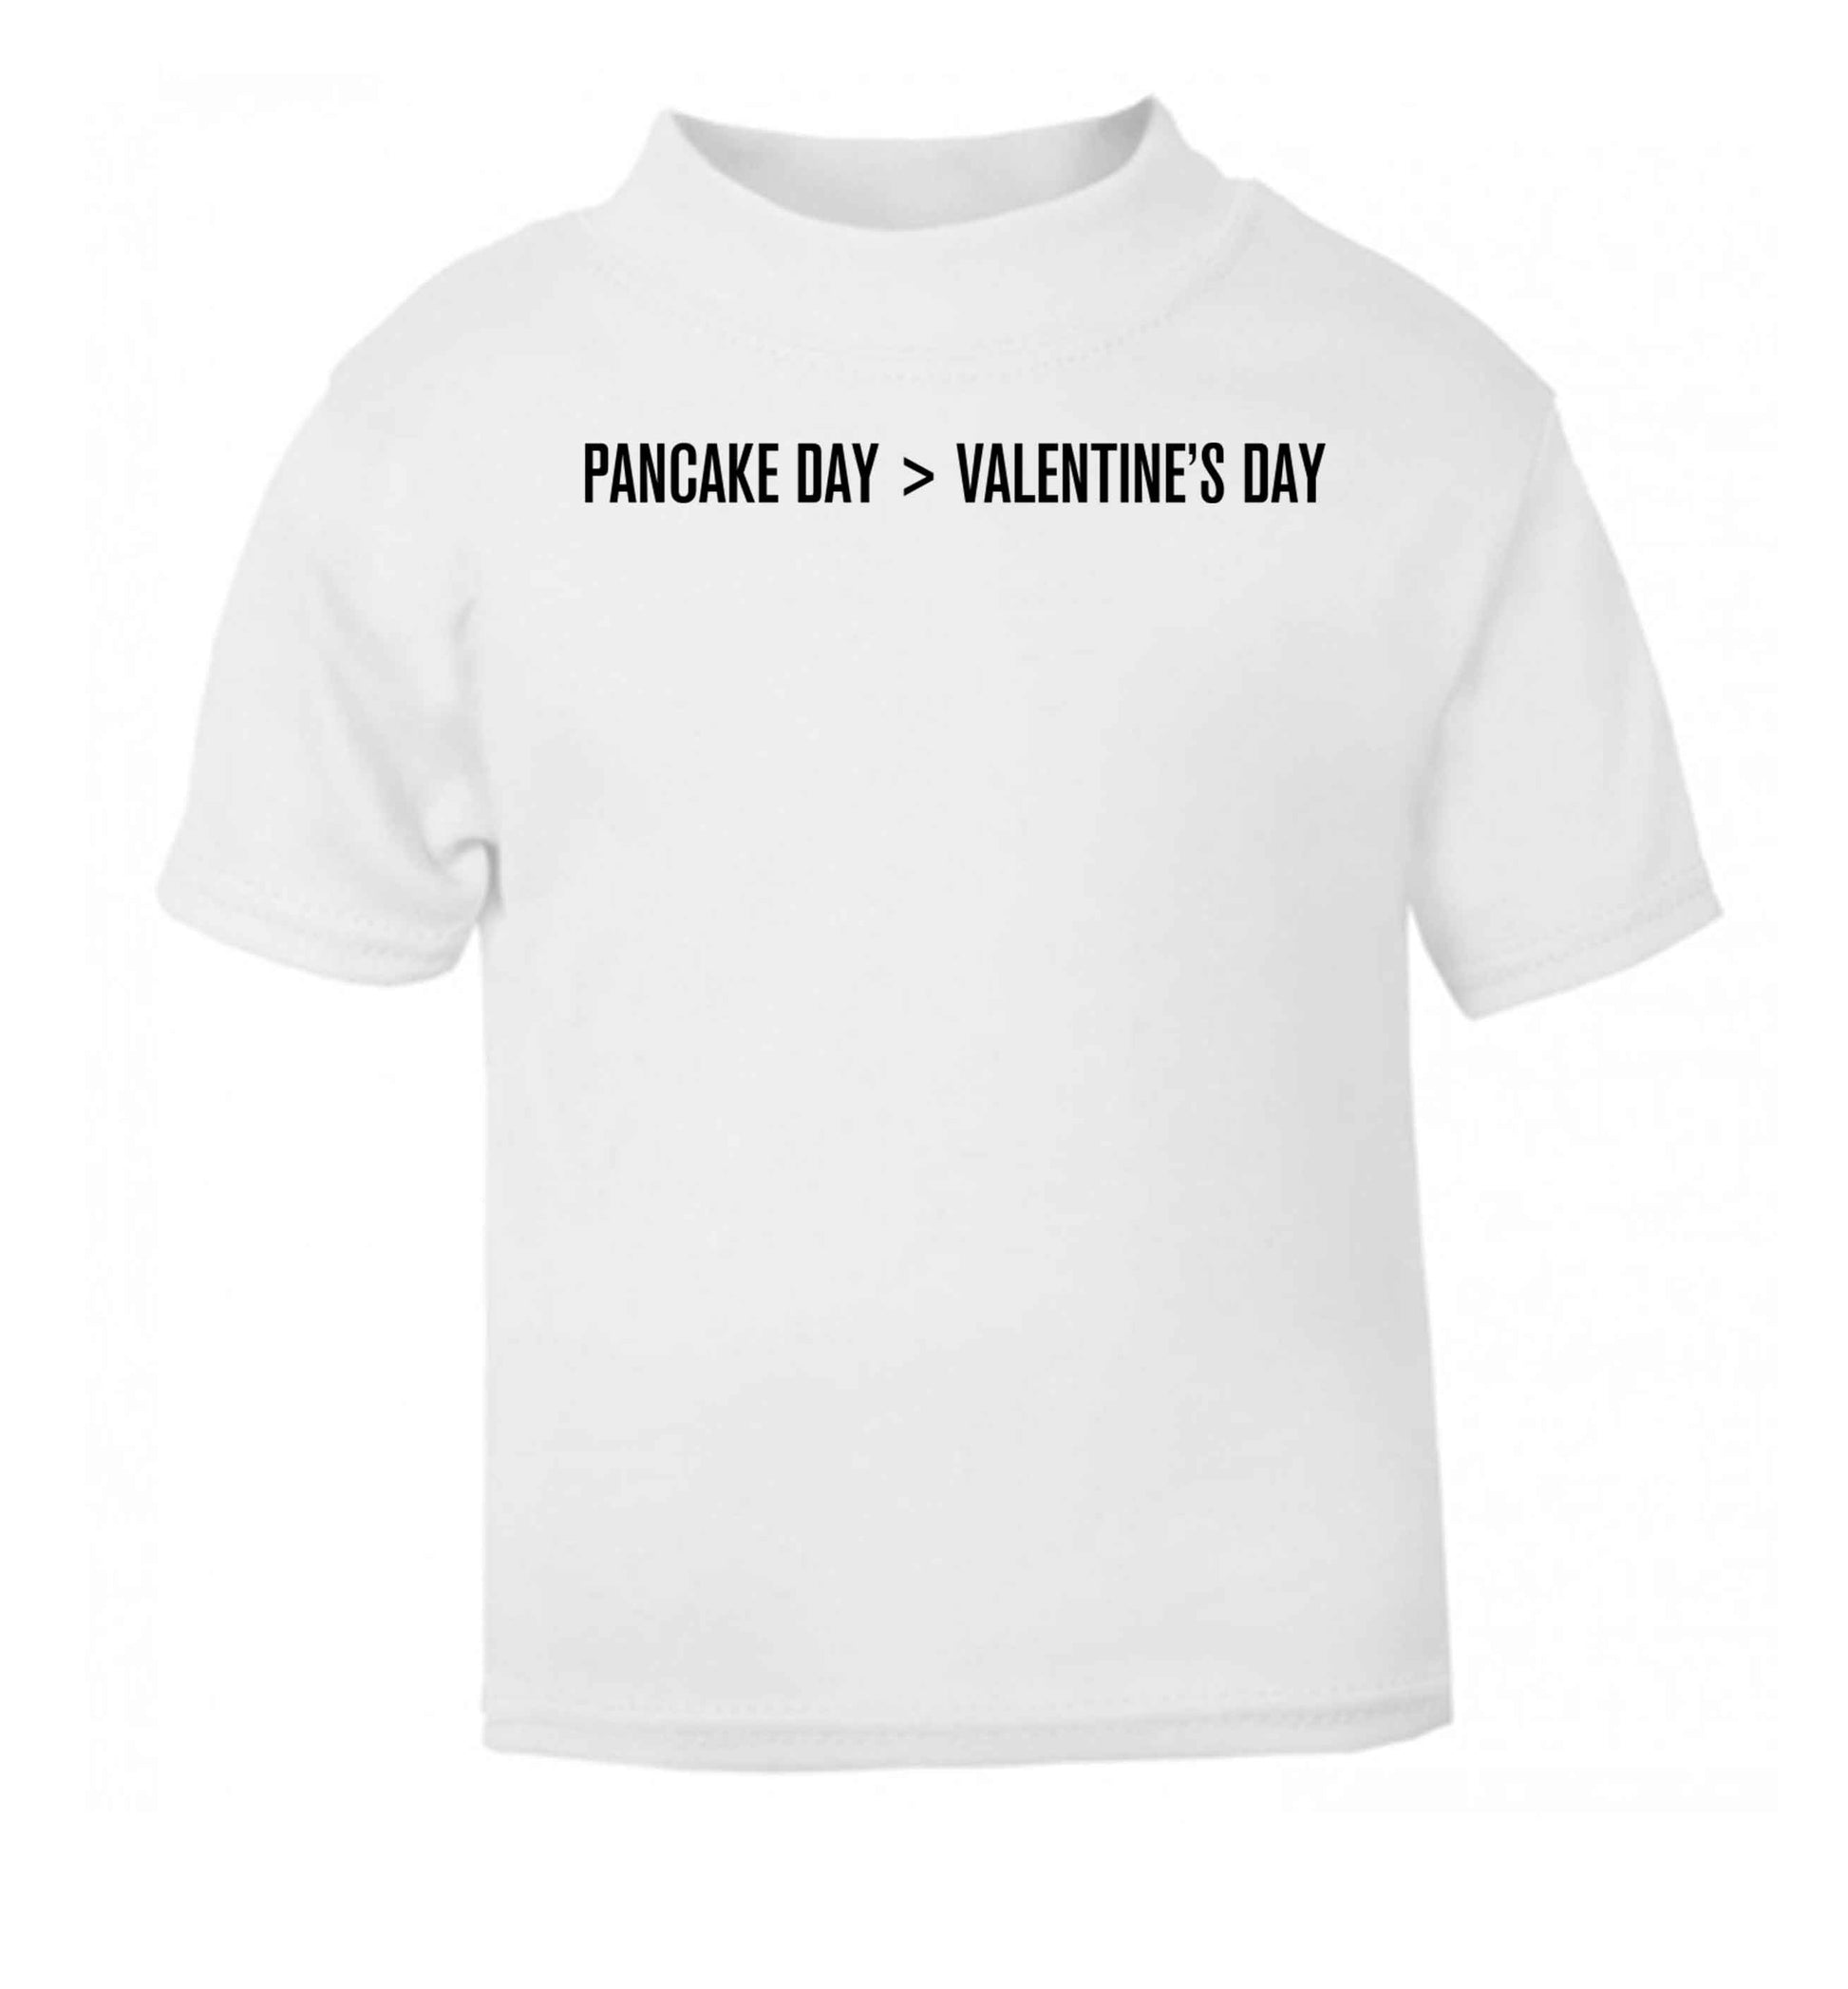 Pancake day > valentines day white baby toddler Tshirt 2 Years